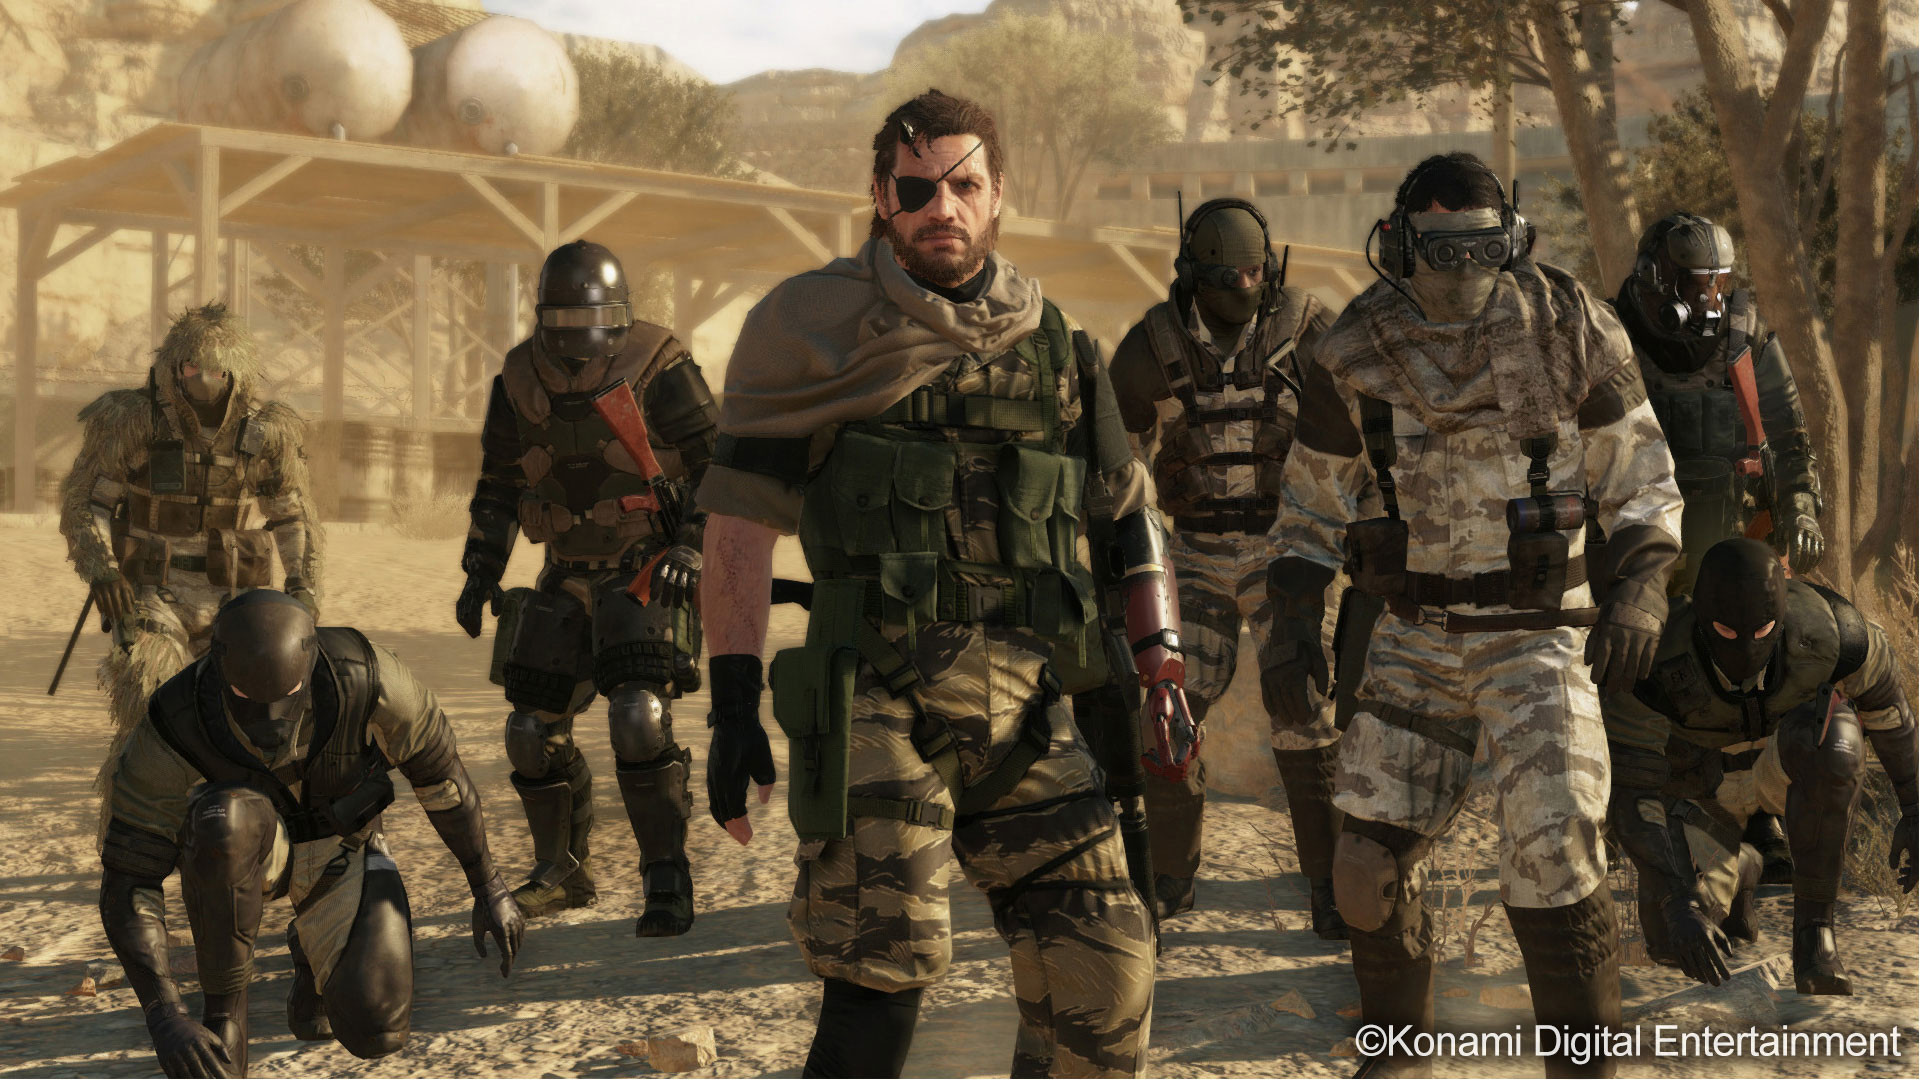 1920x1080 Metal Gear Online: Artwork, screenshots and some information